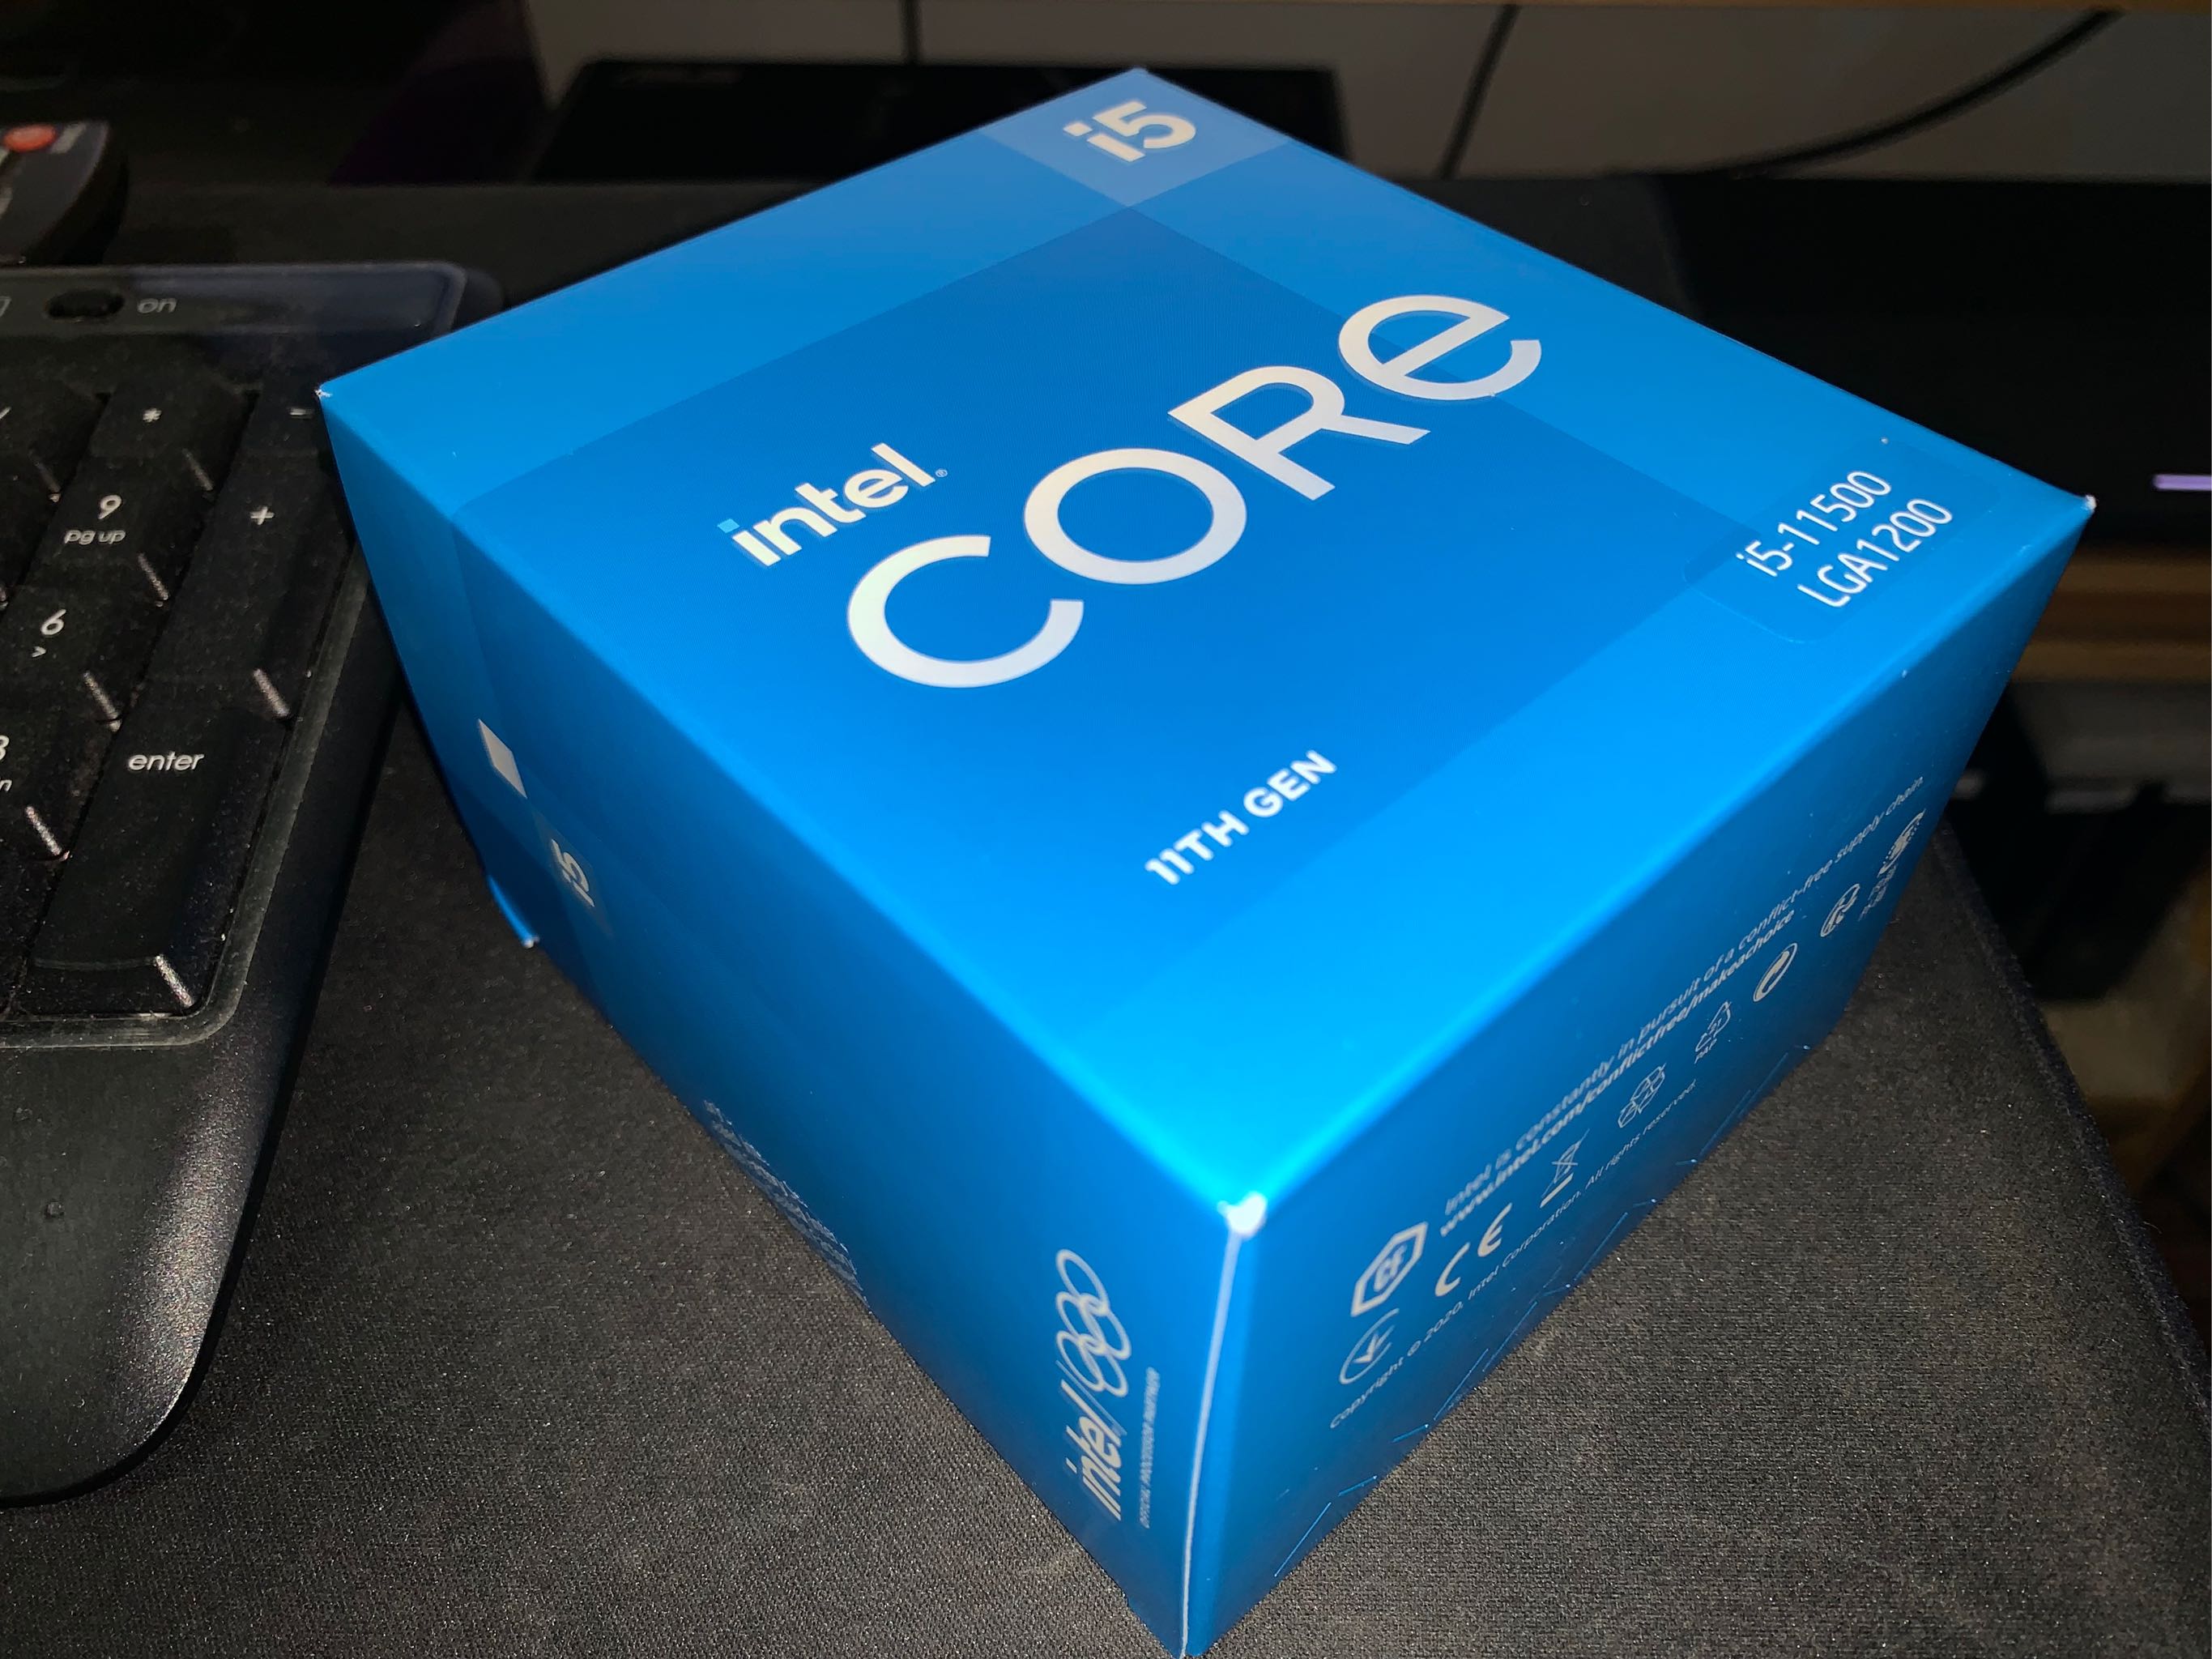 Intel Core i5 13600K review